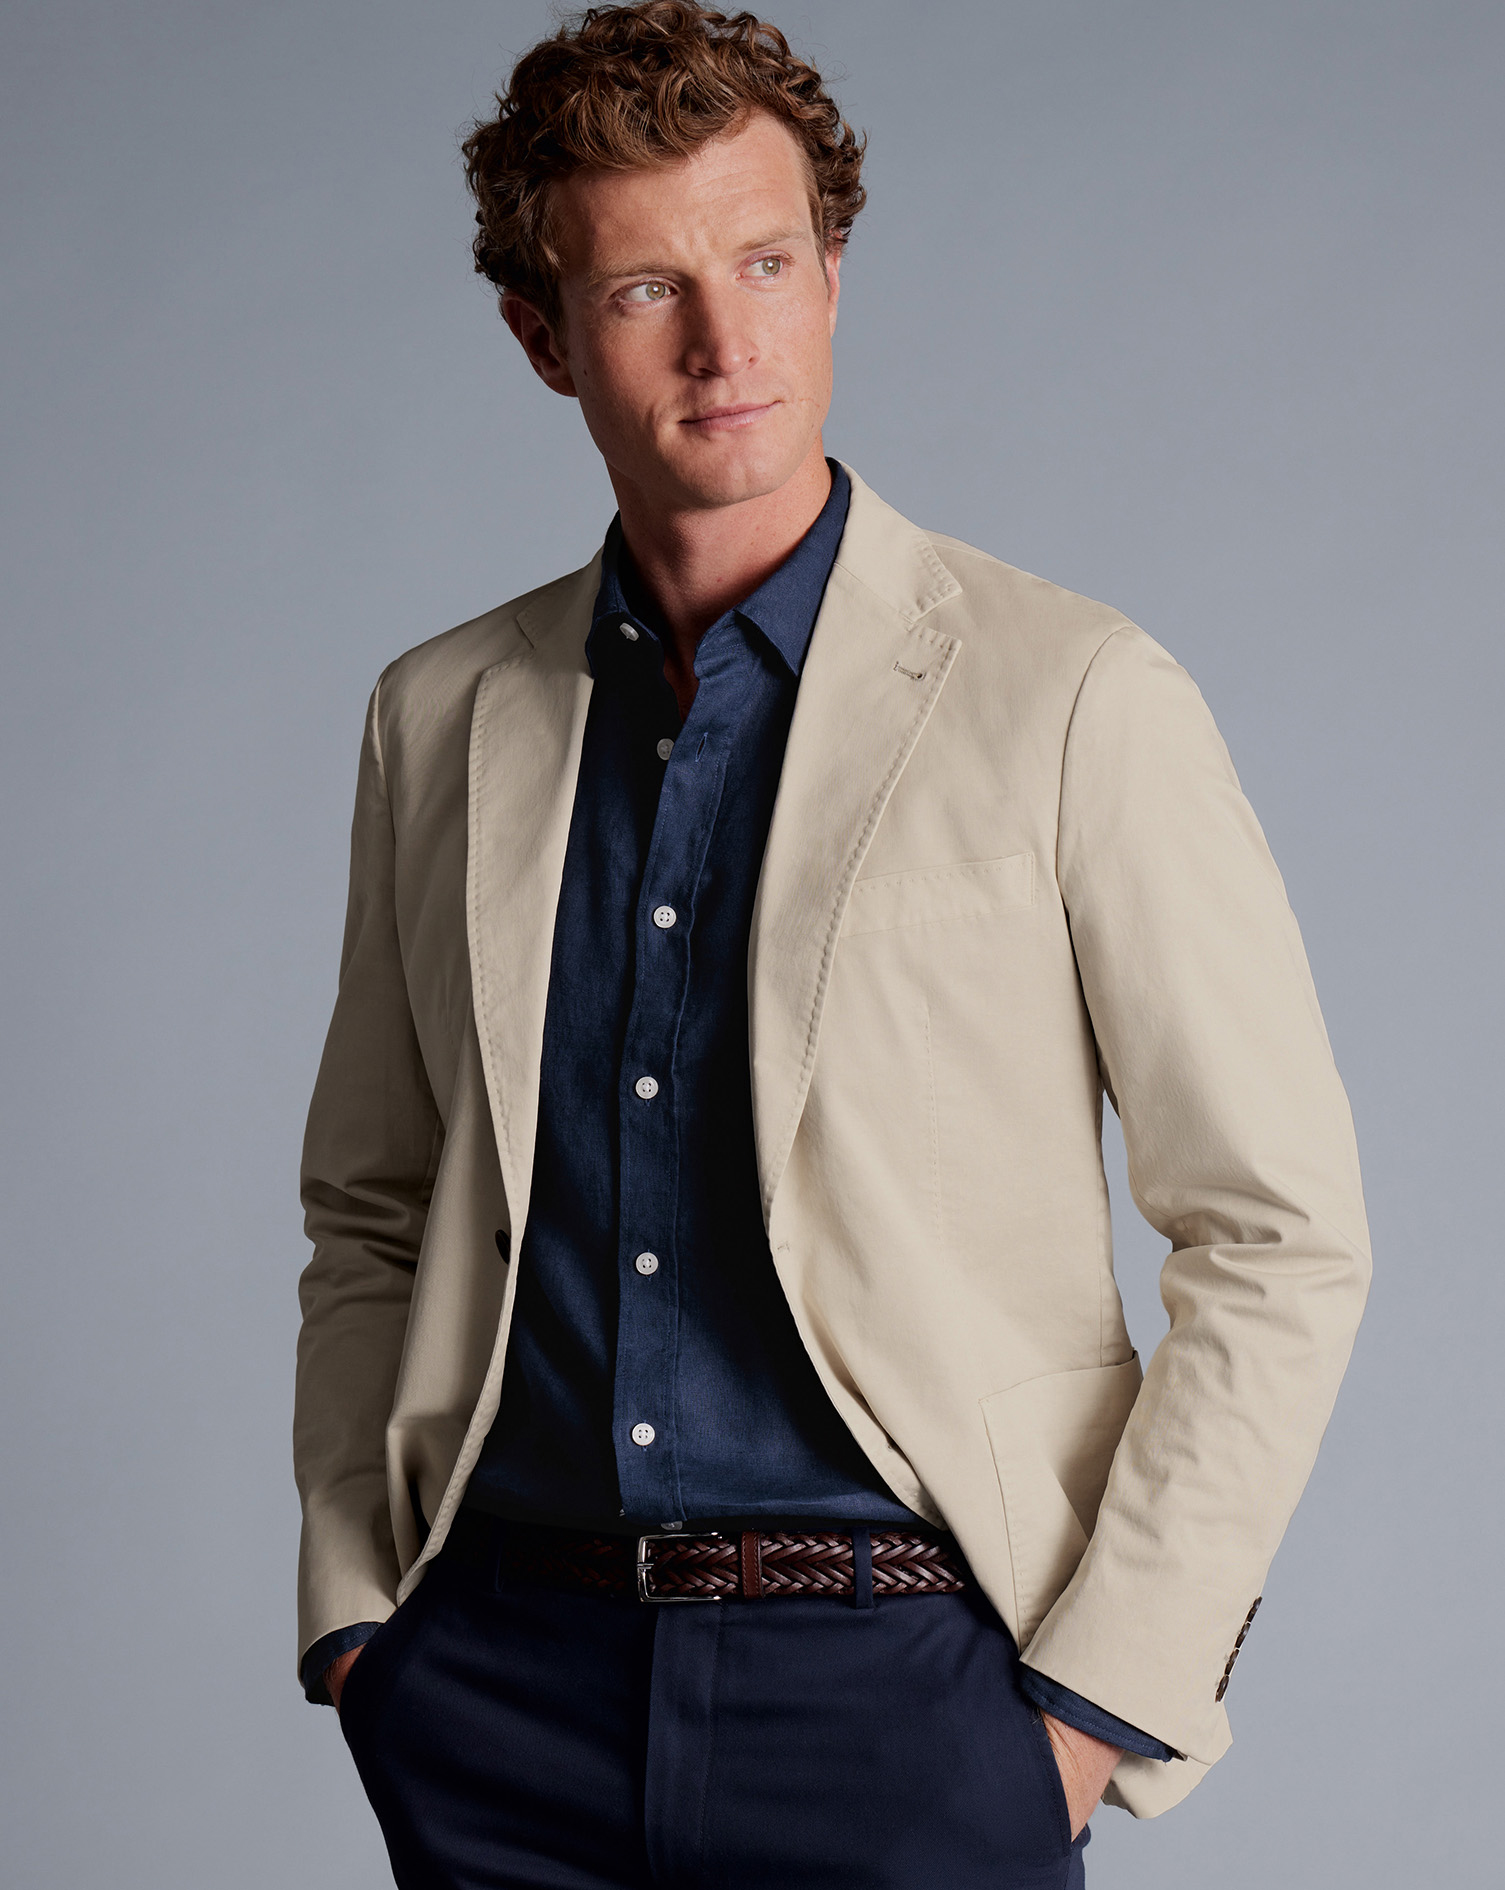 Charles Tyrwhitt Stretch Garment Dyed na Jacket - Limestone Neutral Size 40R Cotton
